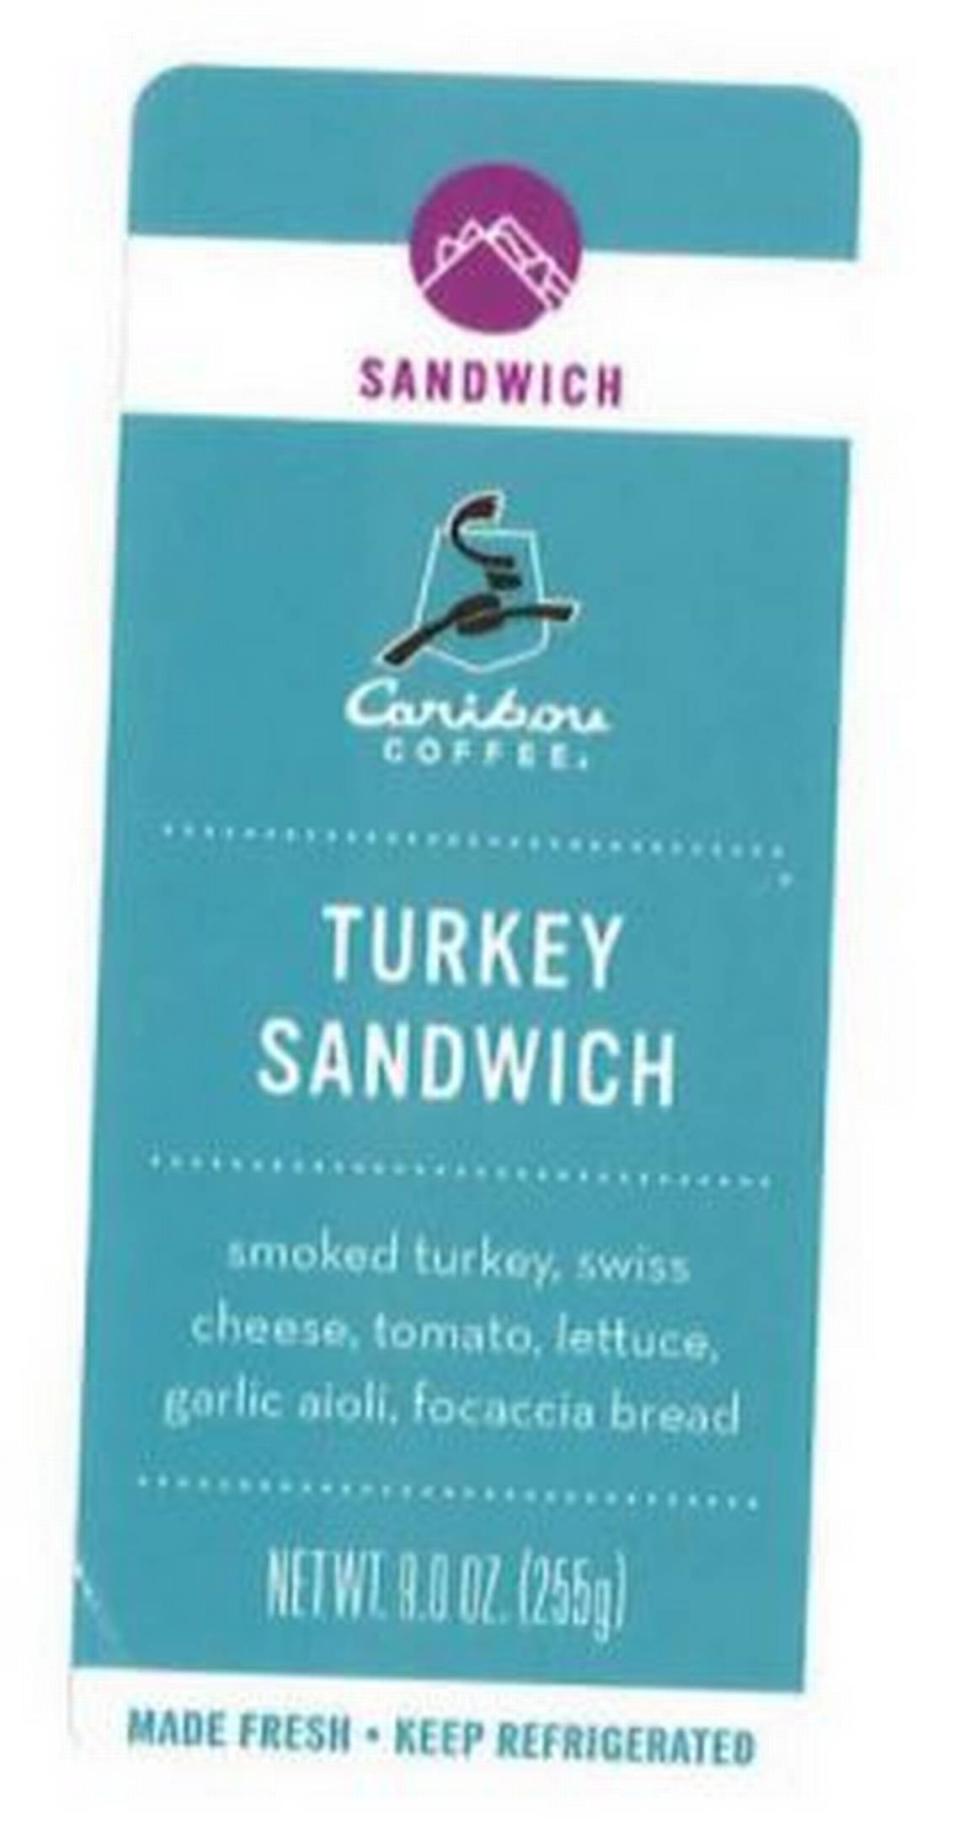 Caribou Turkey Sandwich label